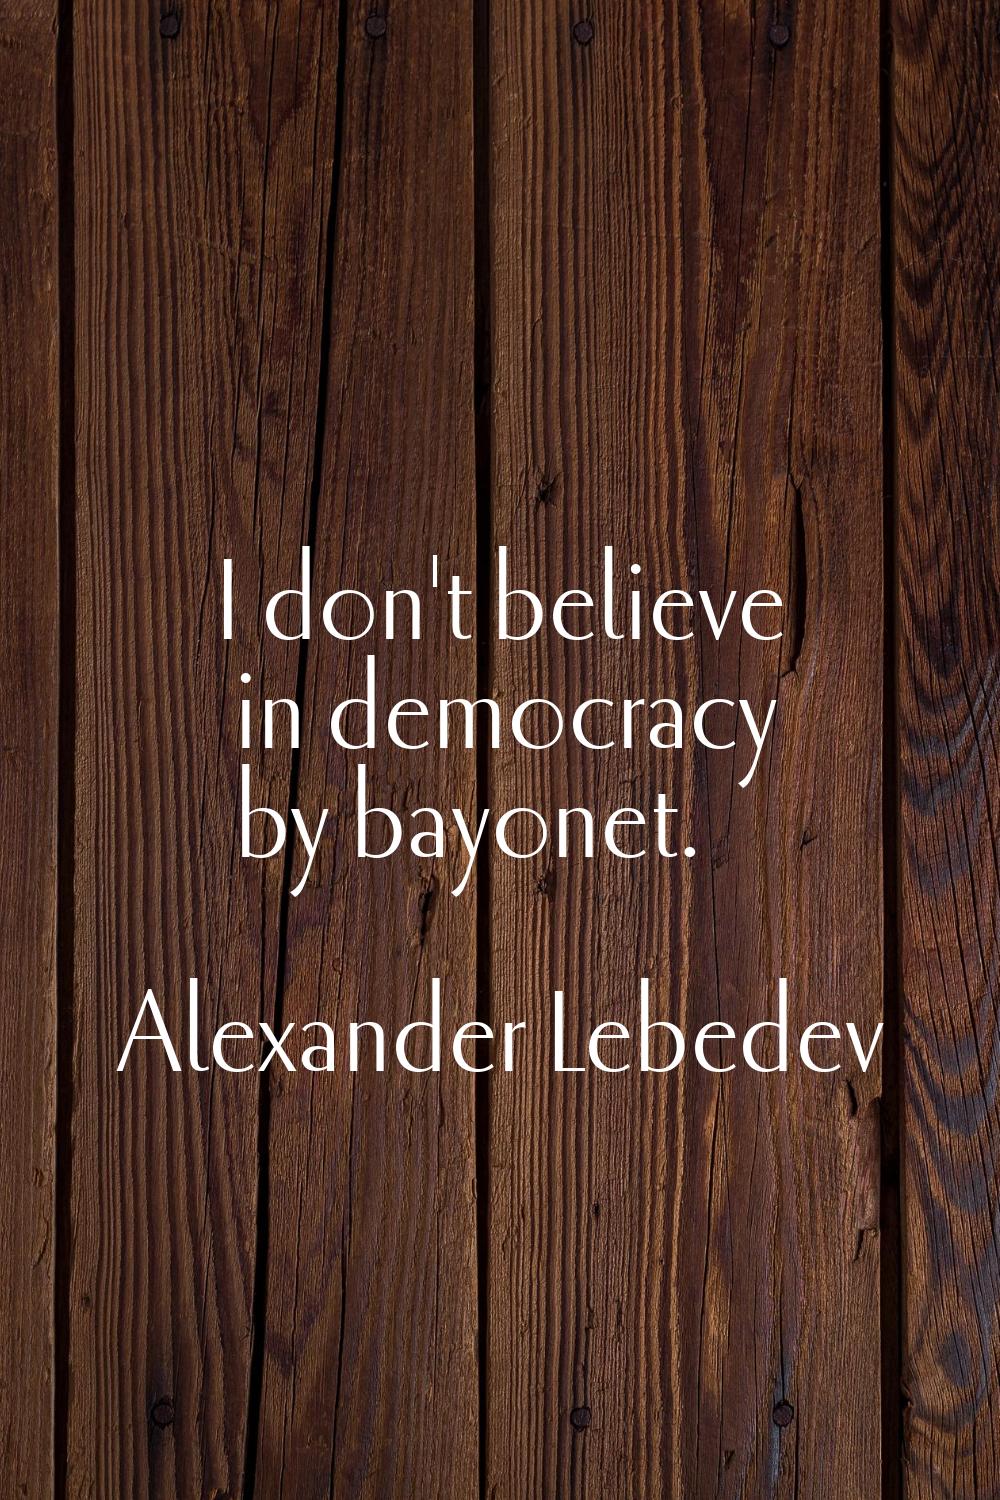 I don't believe in democracy by bayonet.